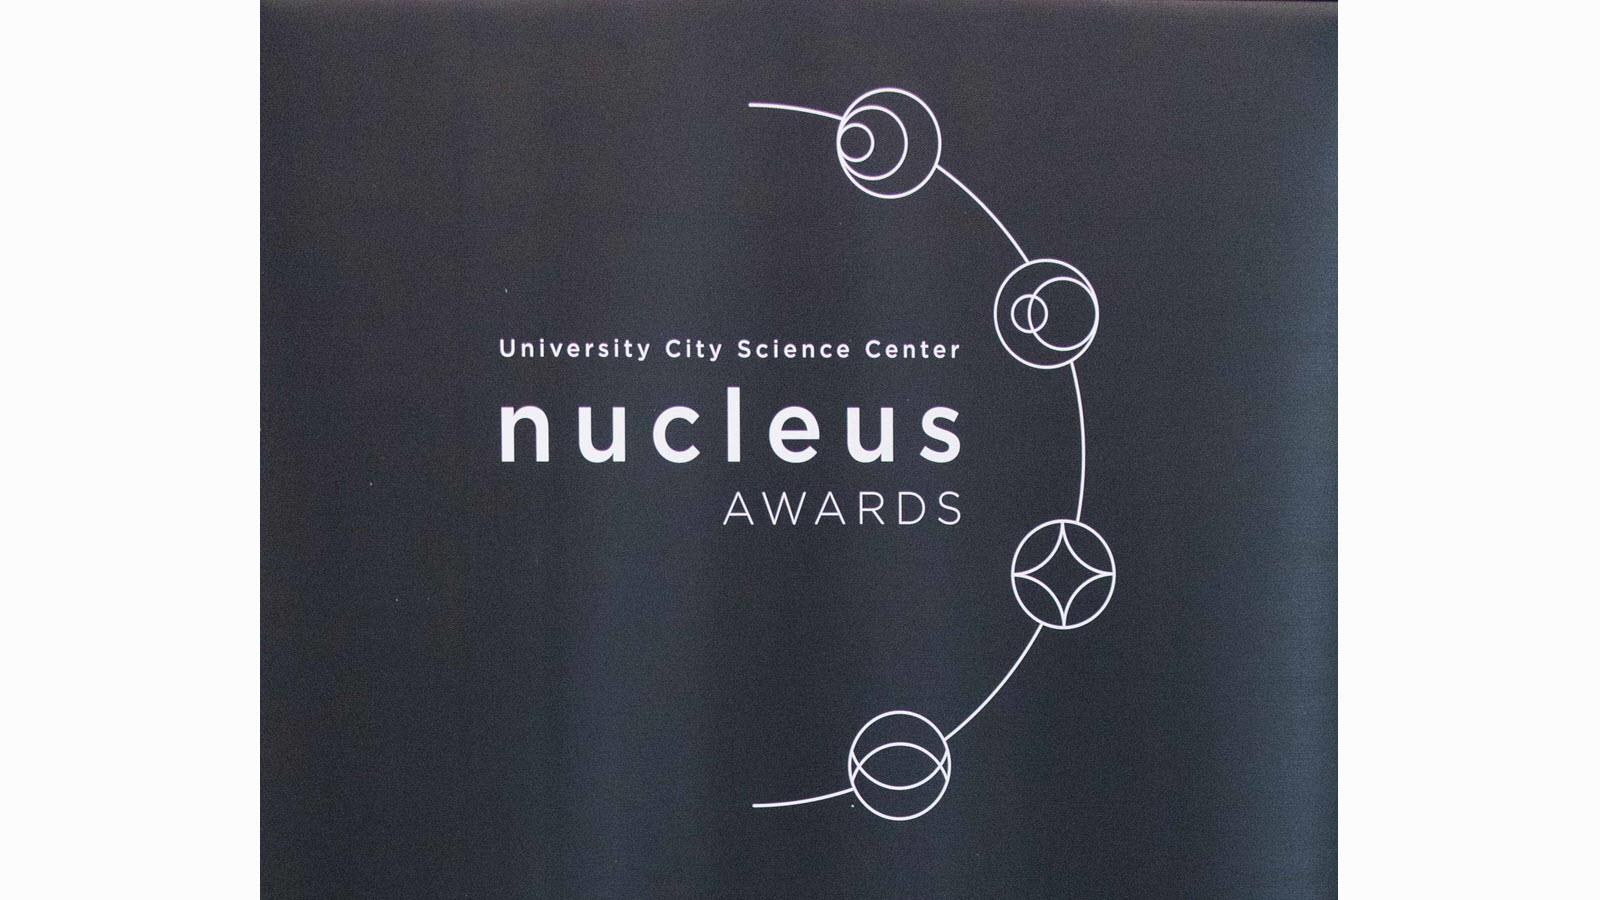 University City Science Center Nucleus Awards logo